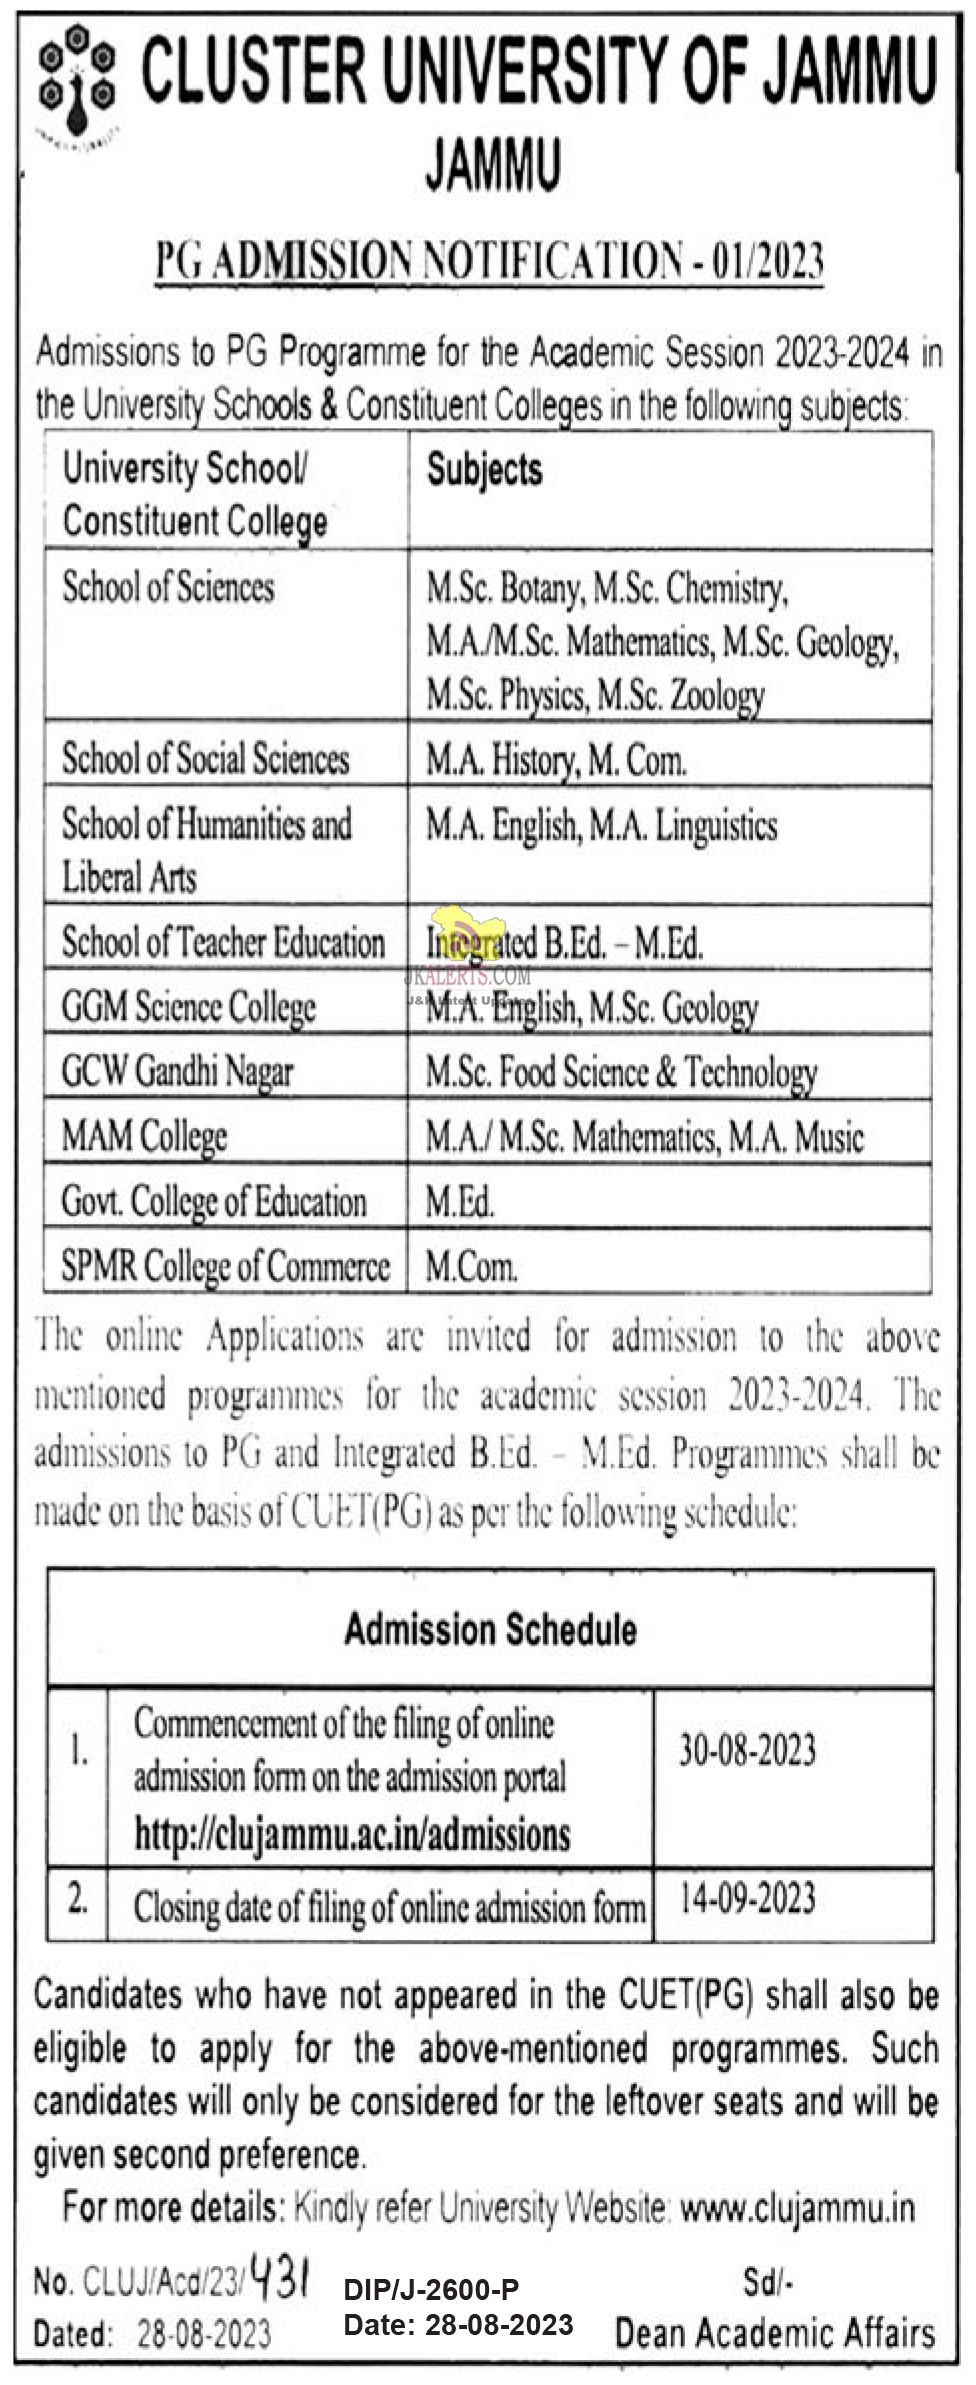 Jammu Cluster University PG Admission Notification.